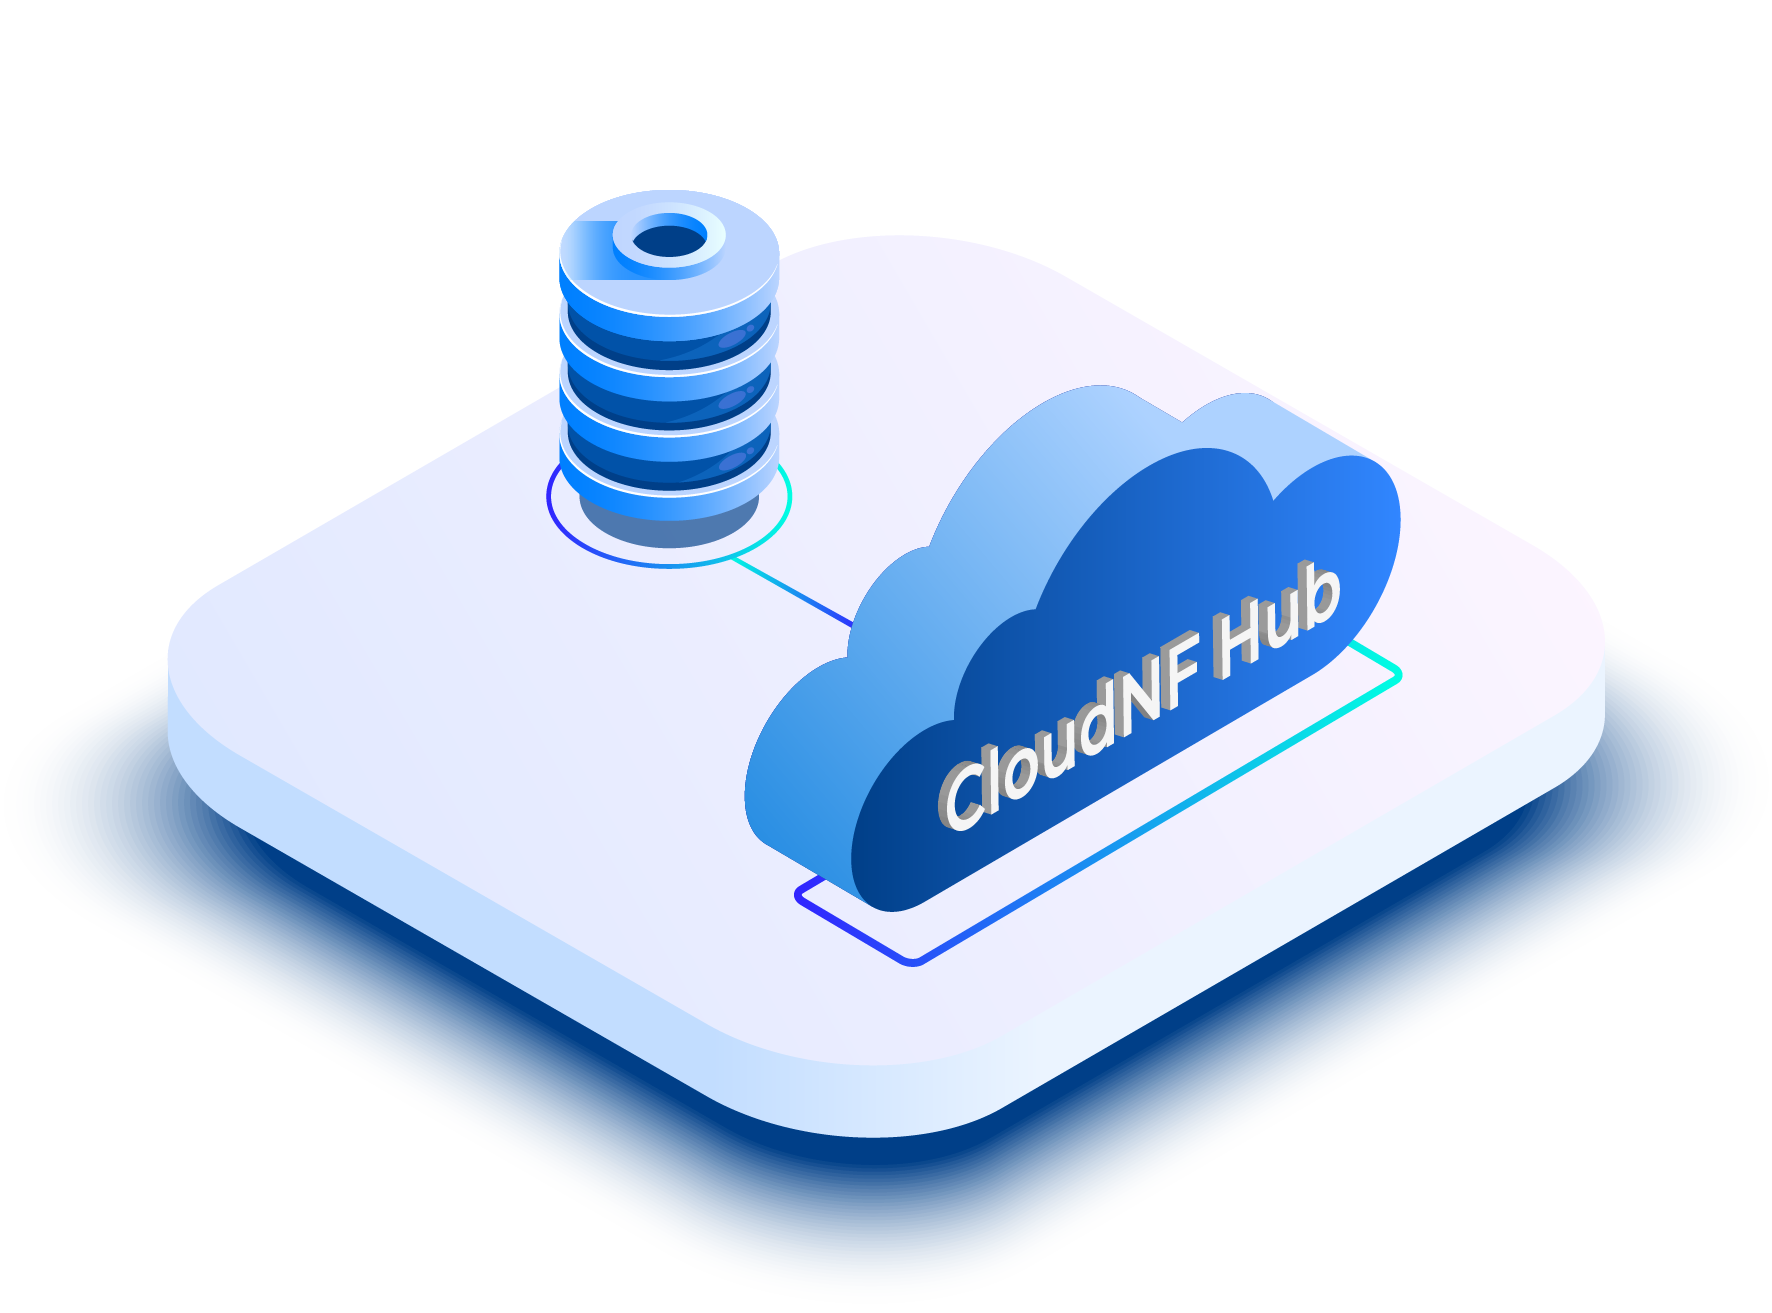 COSGrid CloudNF Hub